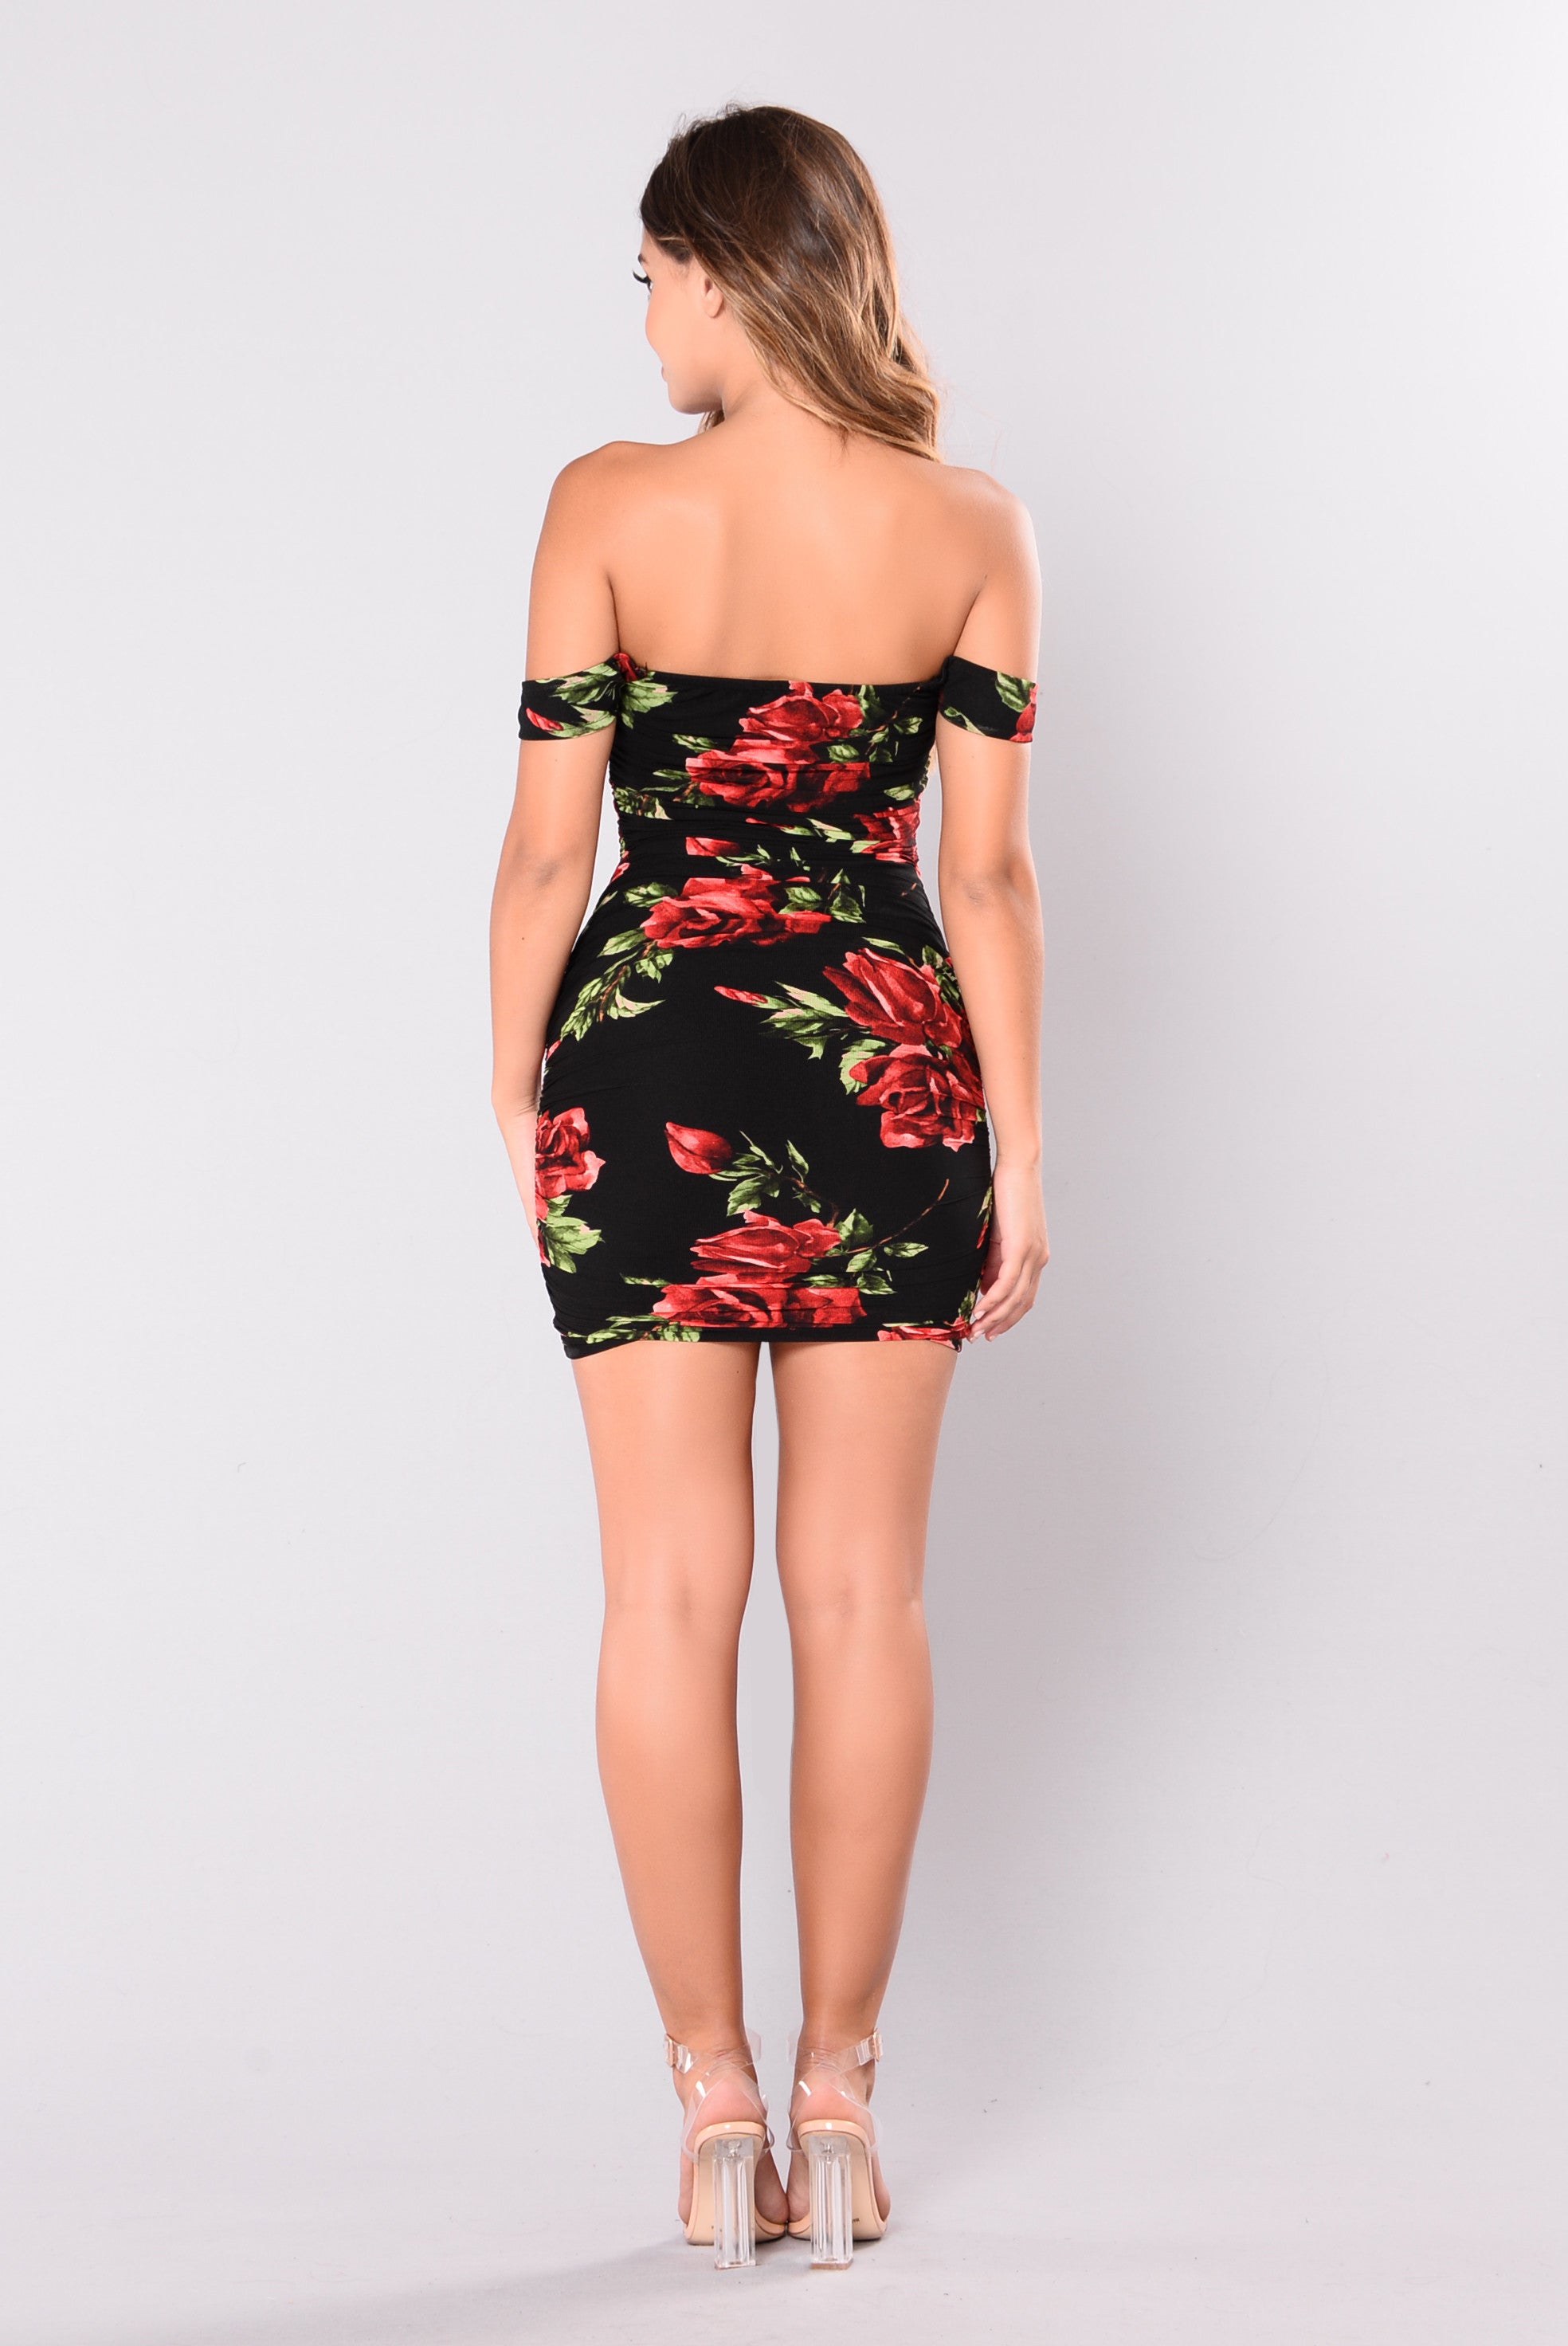 Cascabel Rose Mini Dress - Black1968 x 2944